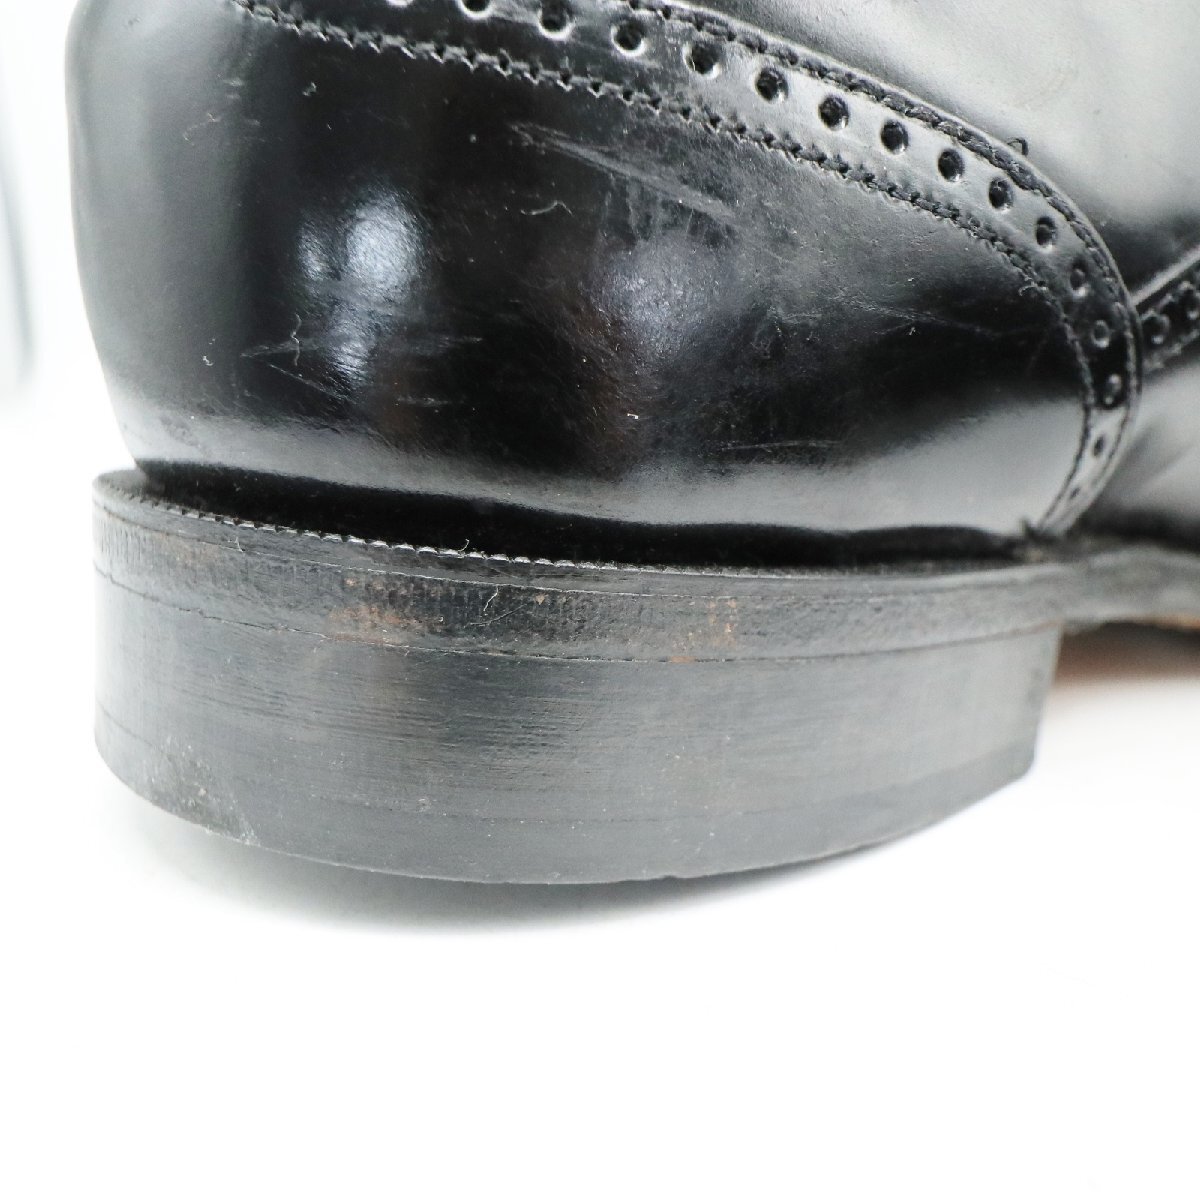 USA製 Dexter 内羽根式 ウィングチップ レザー 革靴 レザーシューズ 通勤 ブラック ( メンズ 9 1/2 M ≒ 27.5cm ) KA0168 1円スタート_画像8